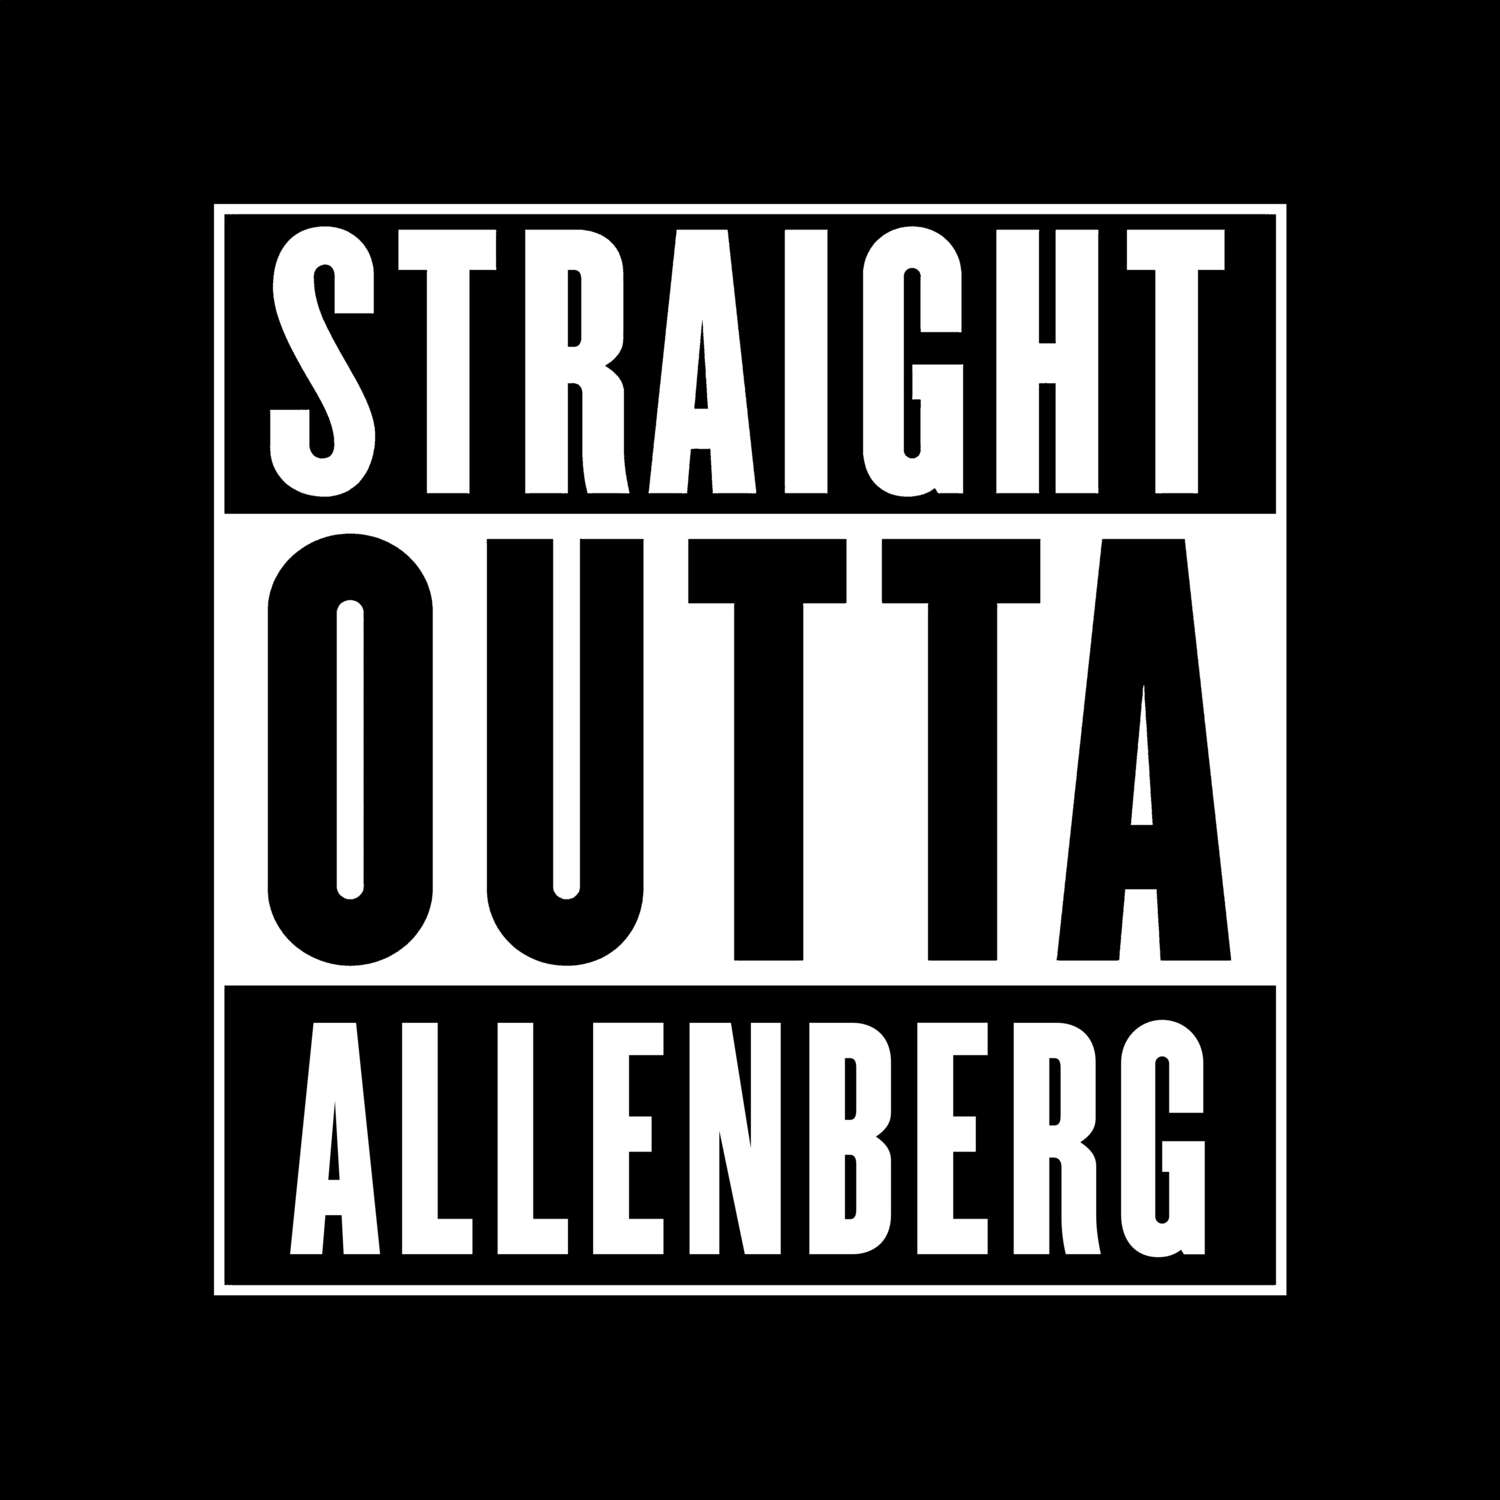 Allenberg T-Shirt »Straight Outta«